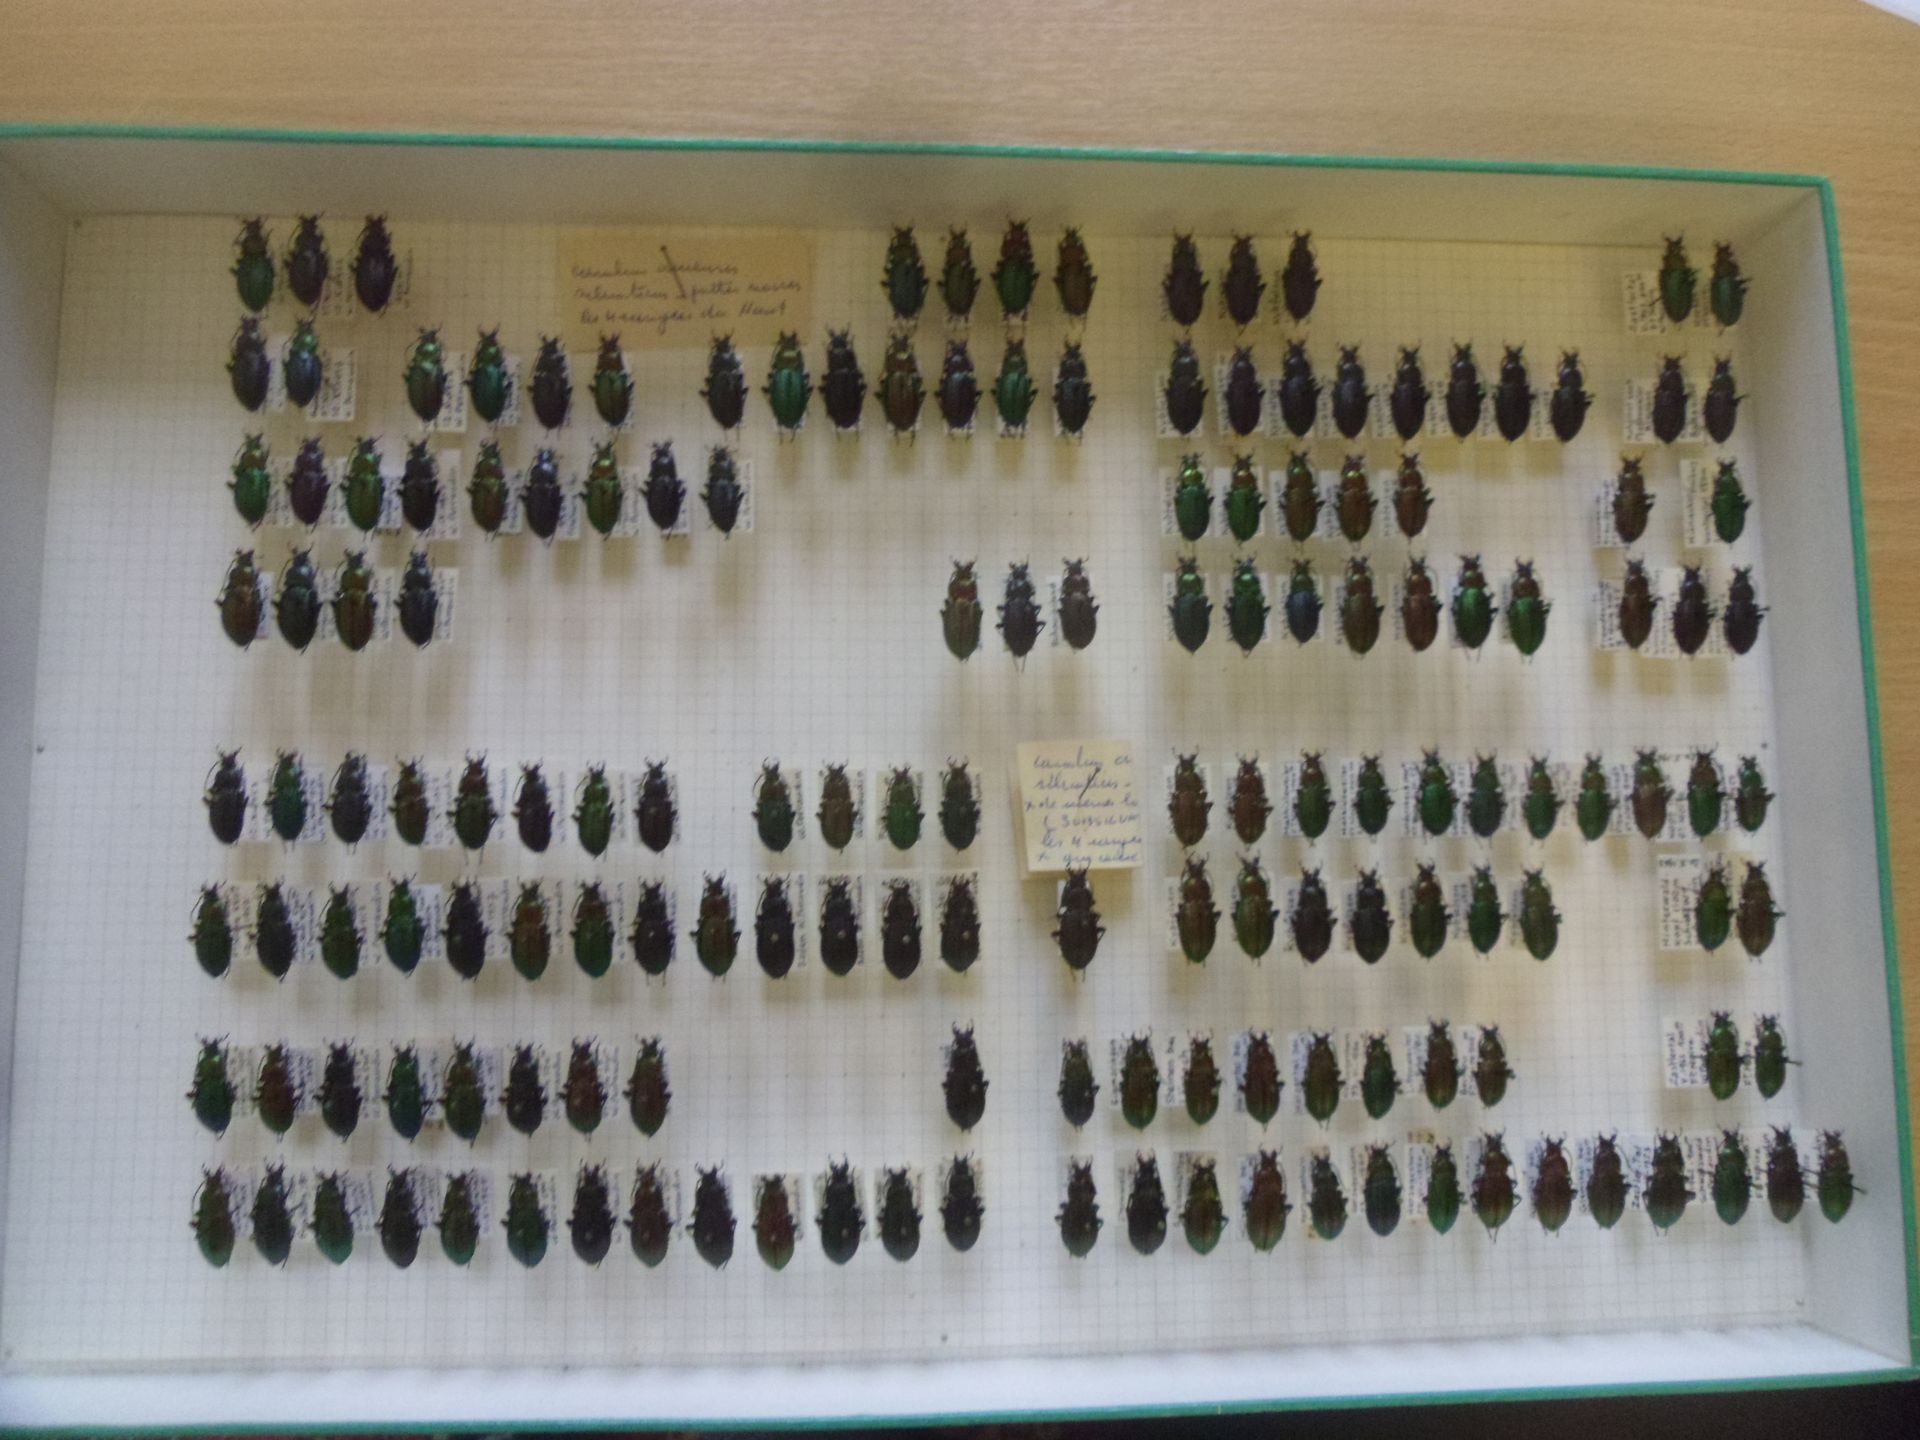 Null 无釉昆虫盒，内装 100 多件欧洲甲虫标本，包括 Carabus arvensis 和 Carabus sylvaticus。
标本采集于 1953 &hellip;